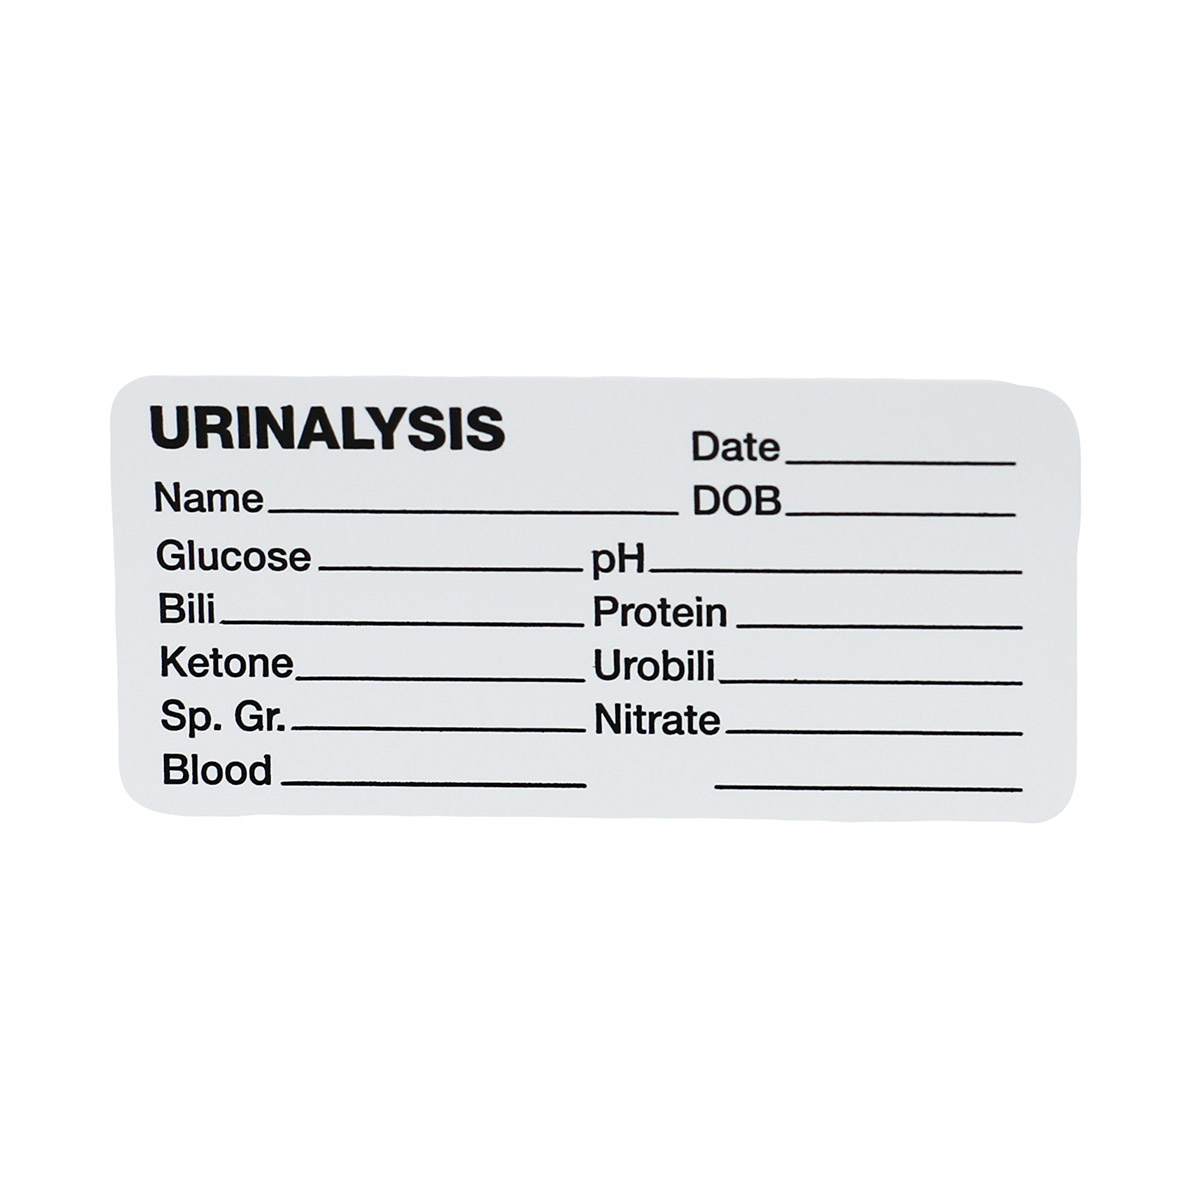 urine dipstick results printable